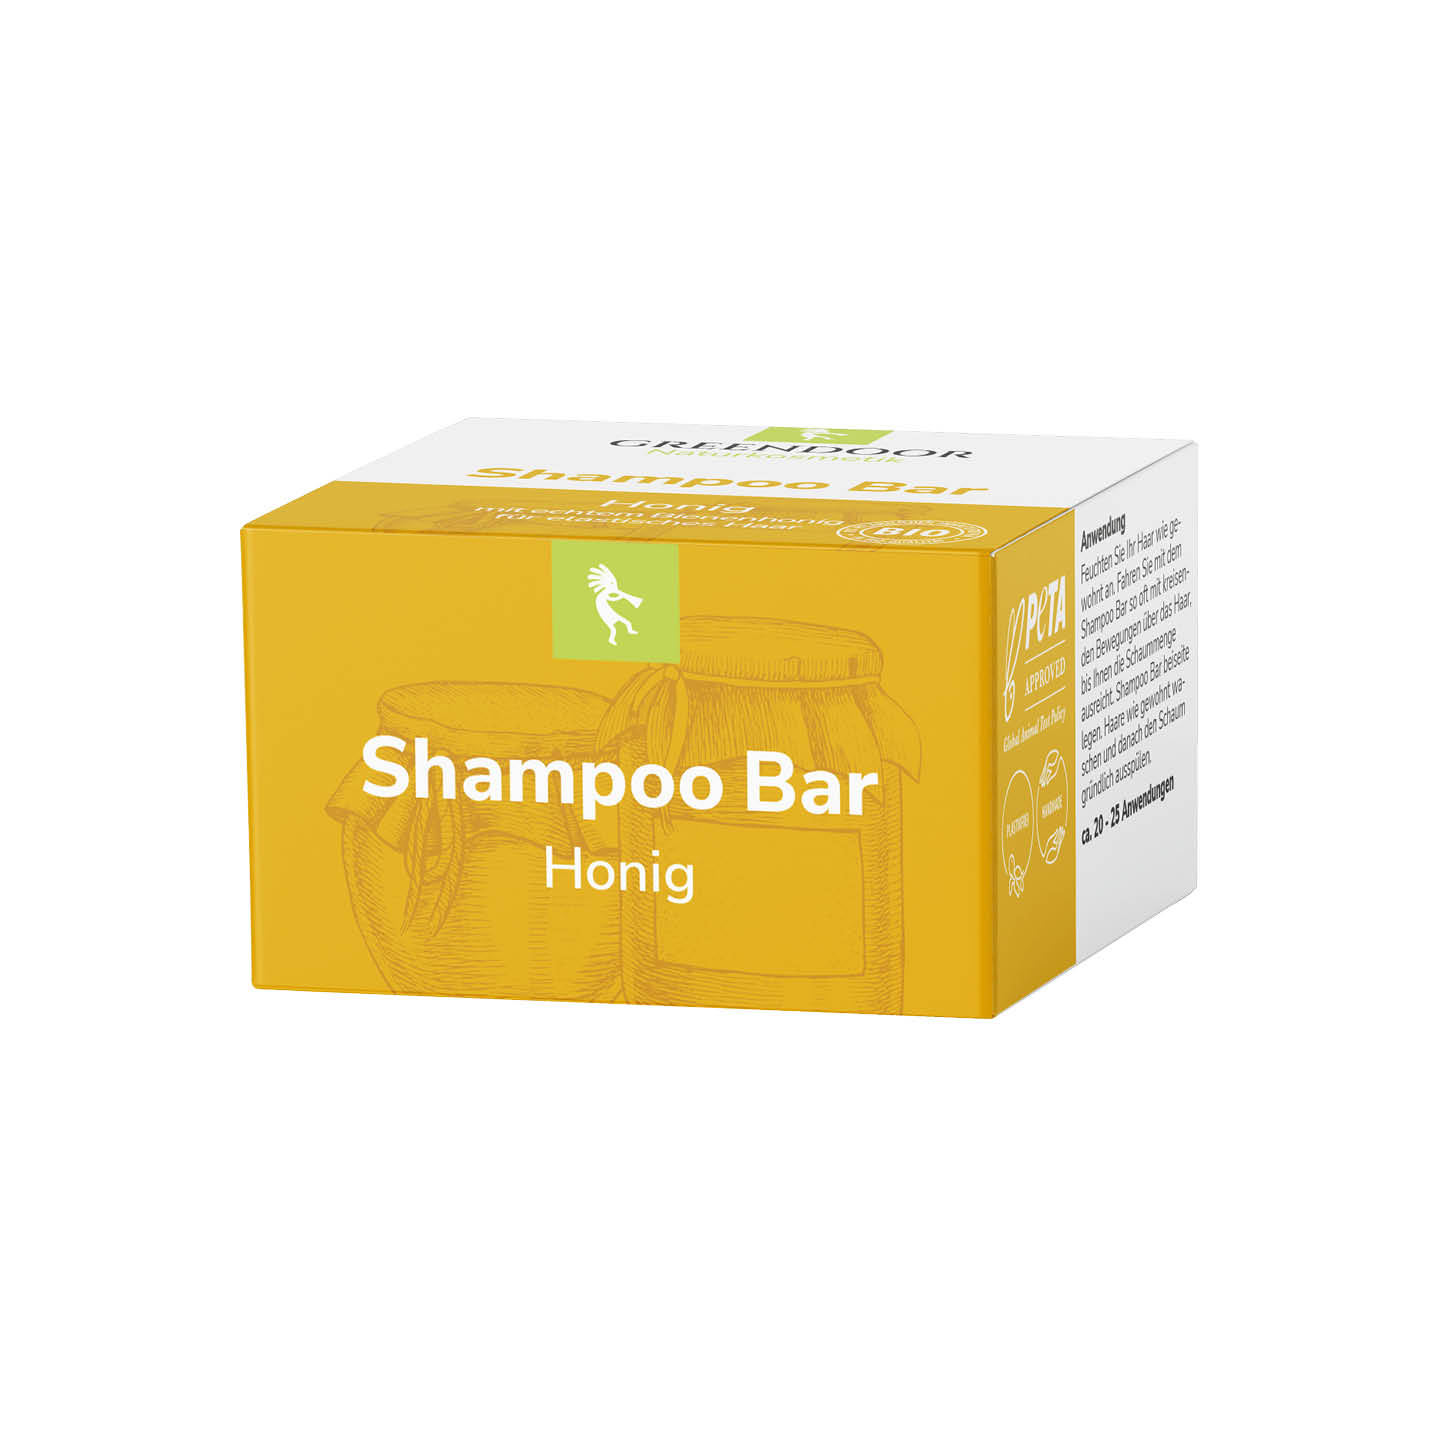 Shampoo Bar Honig